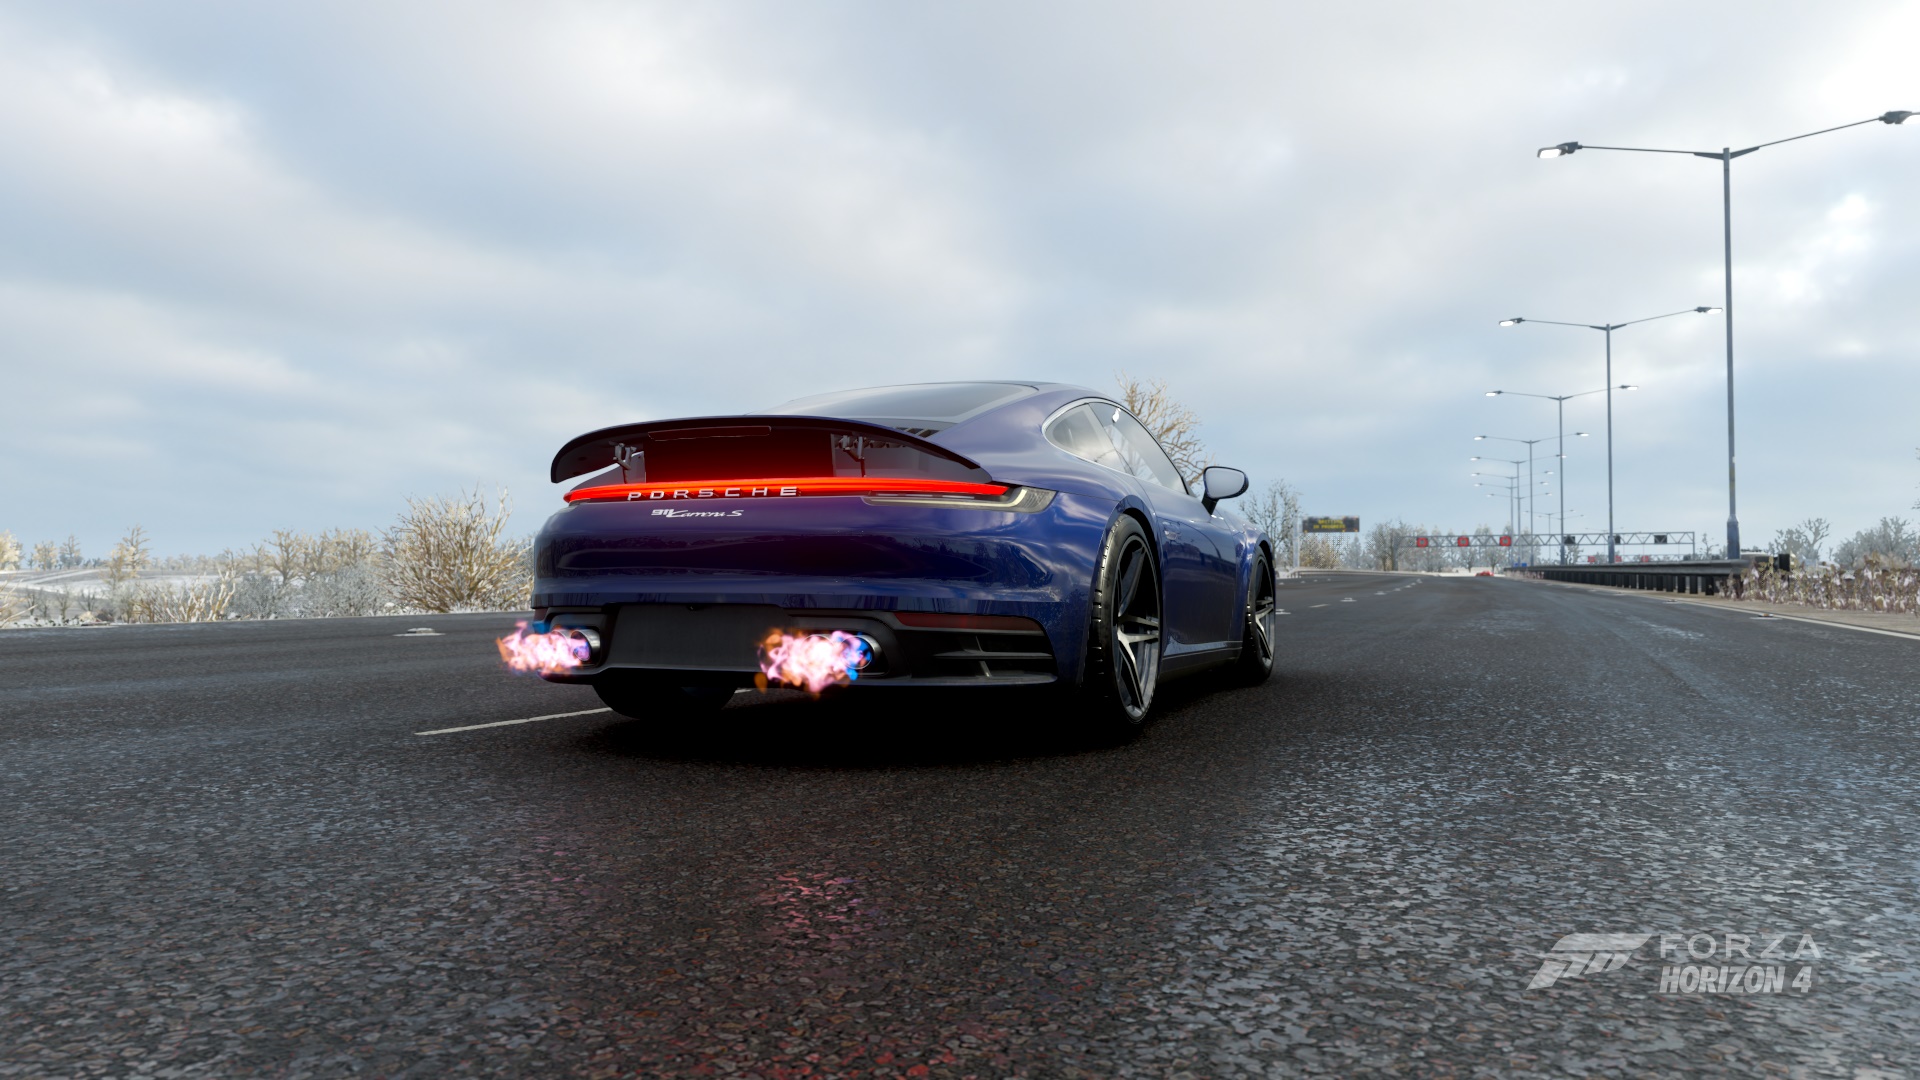 Porsche 911 Carrera S Forza Horizon 4 Video Games Screen Shot 1920x1080